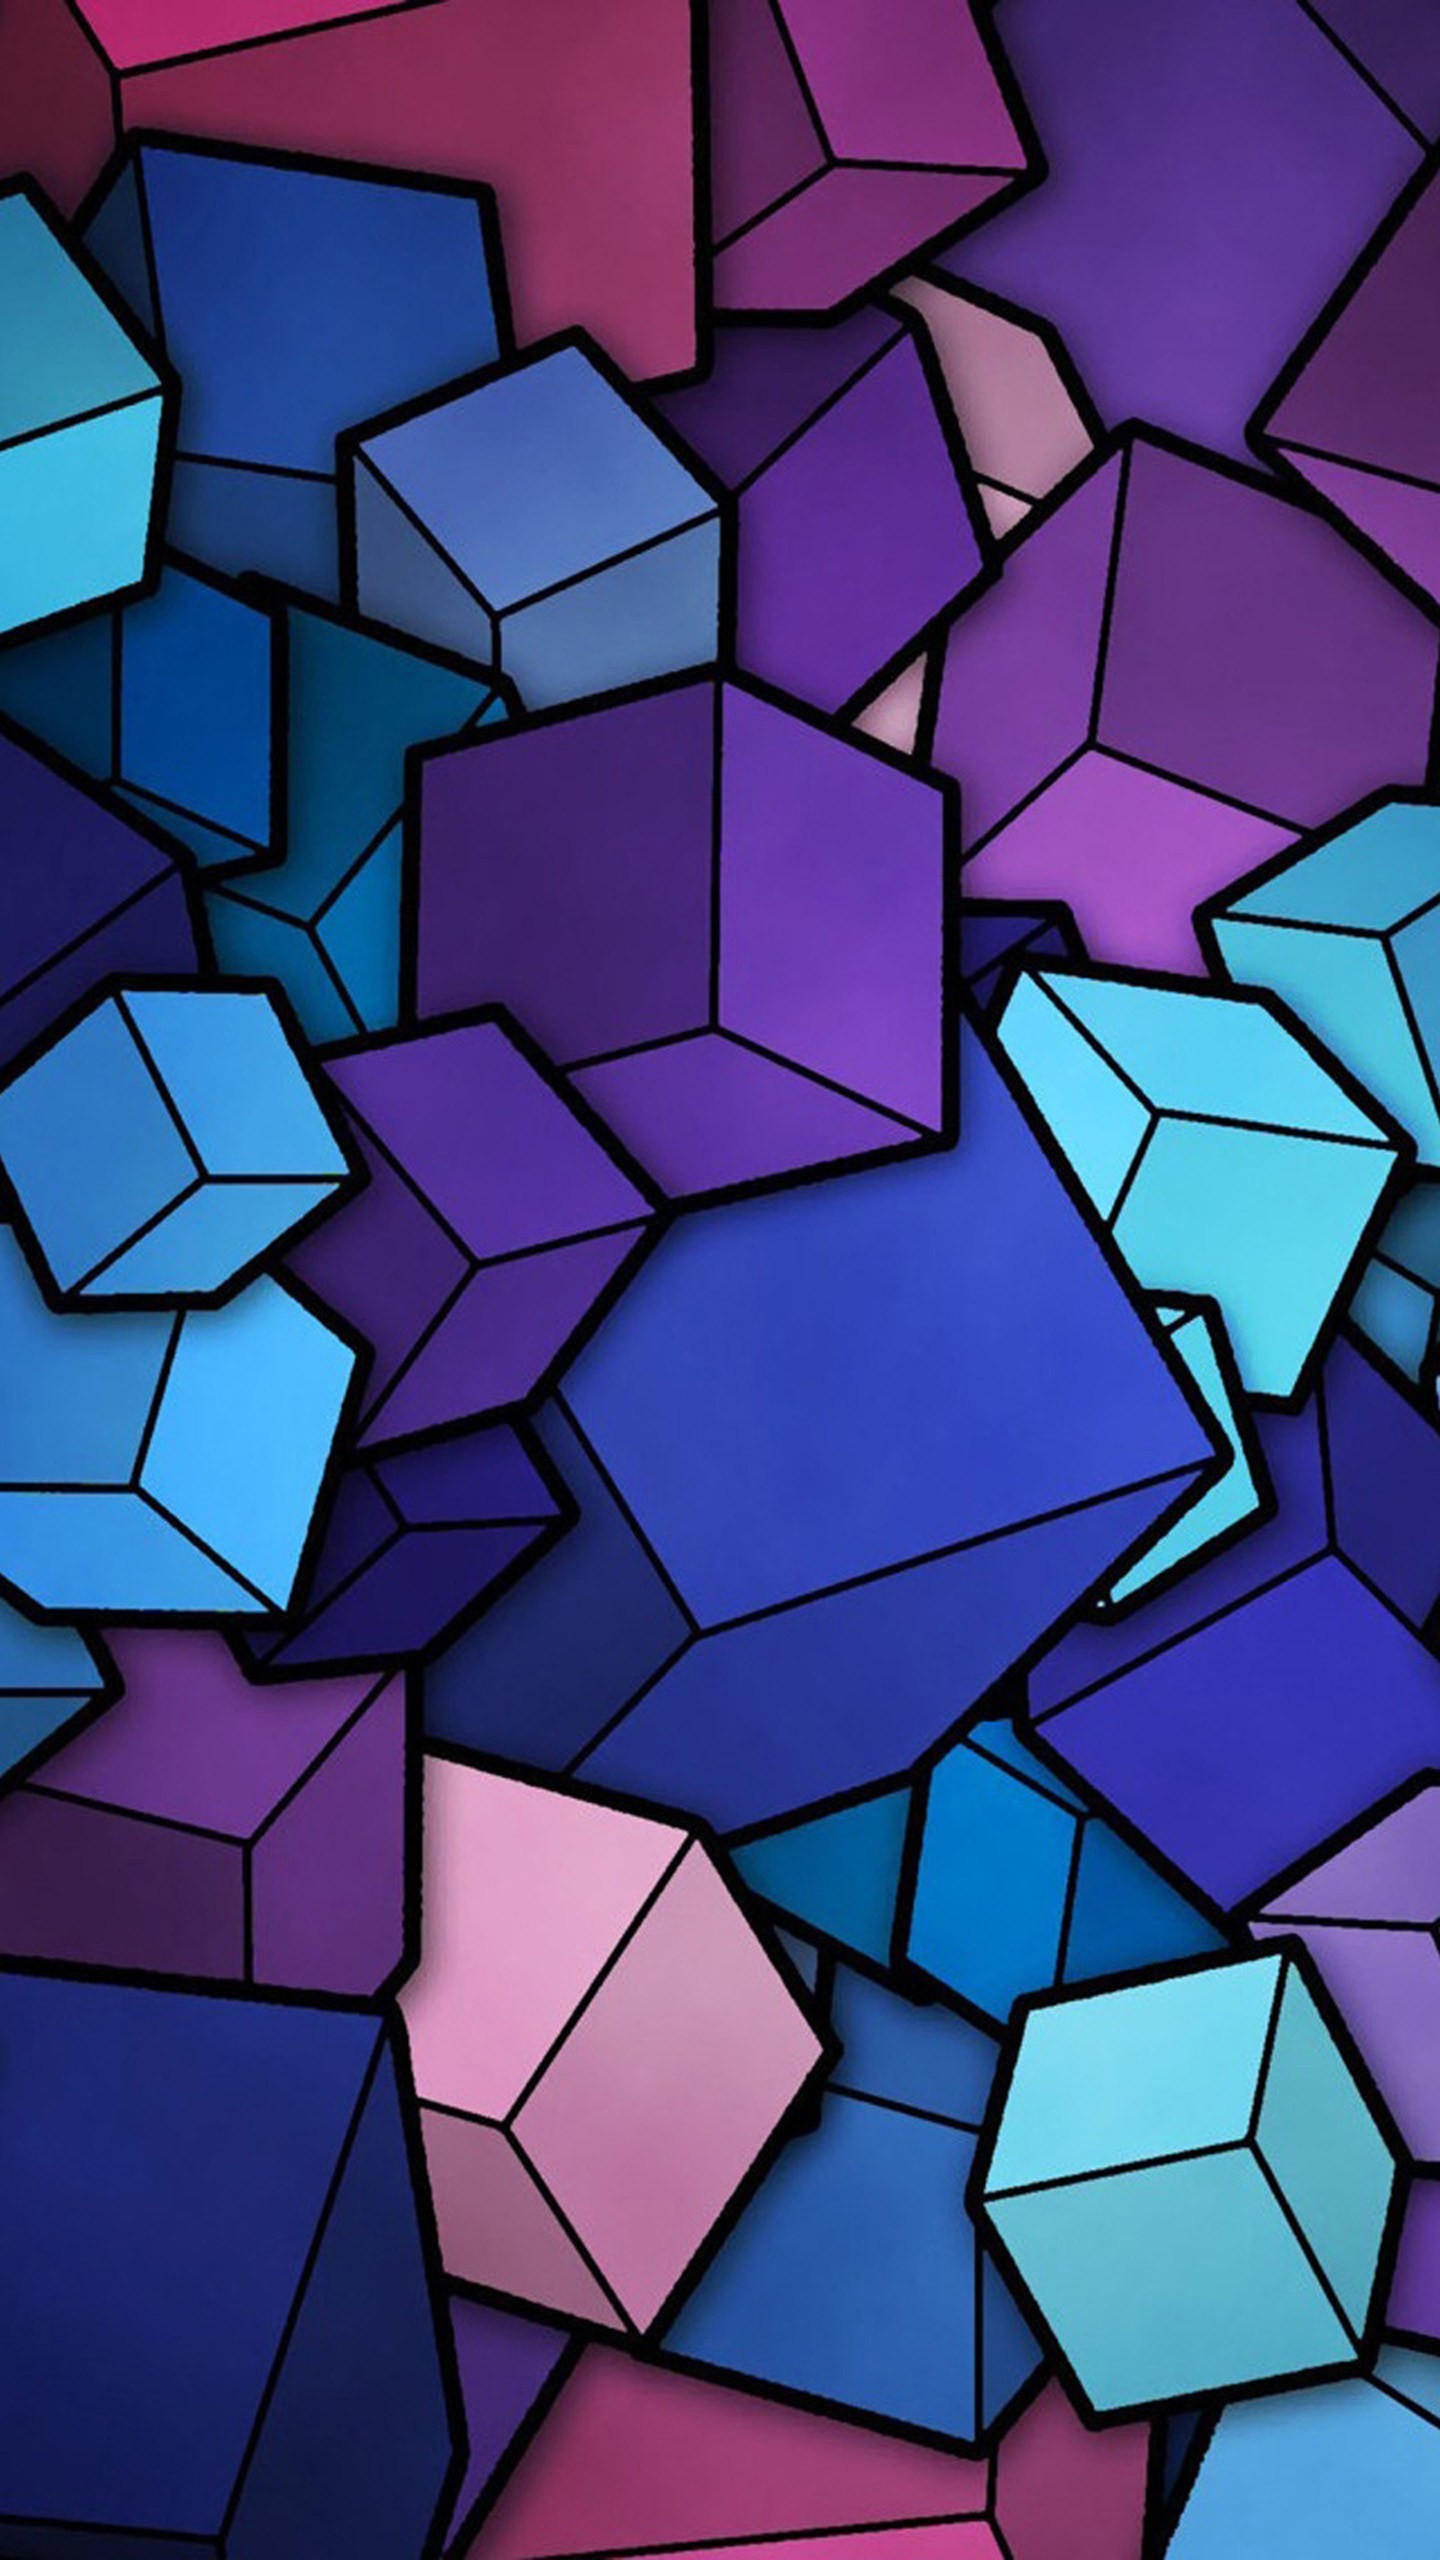 1440x2560 Abstract Cubes Blue Purple Wallpaper Galaxy S6, LG G4, HTC One M9